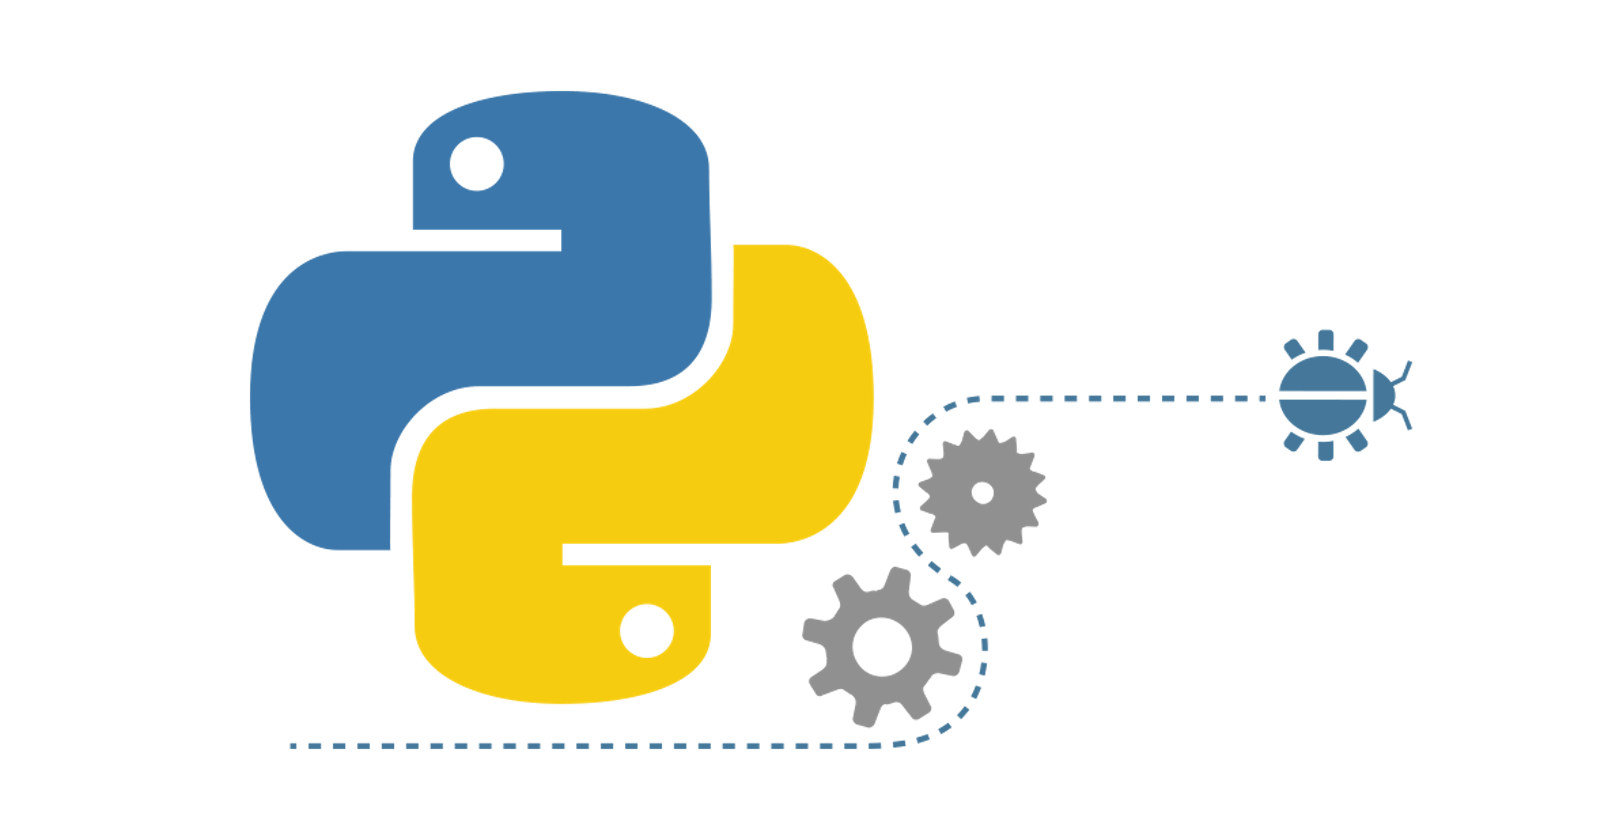 Python Language in a Single Image